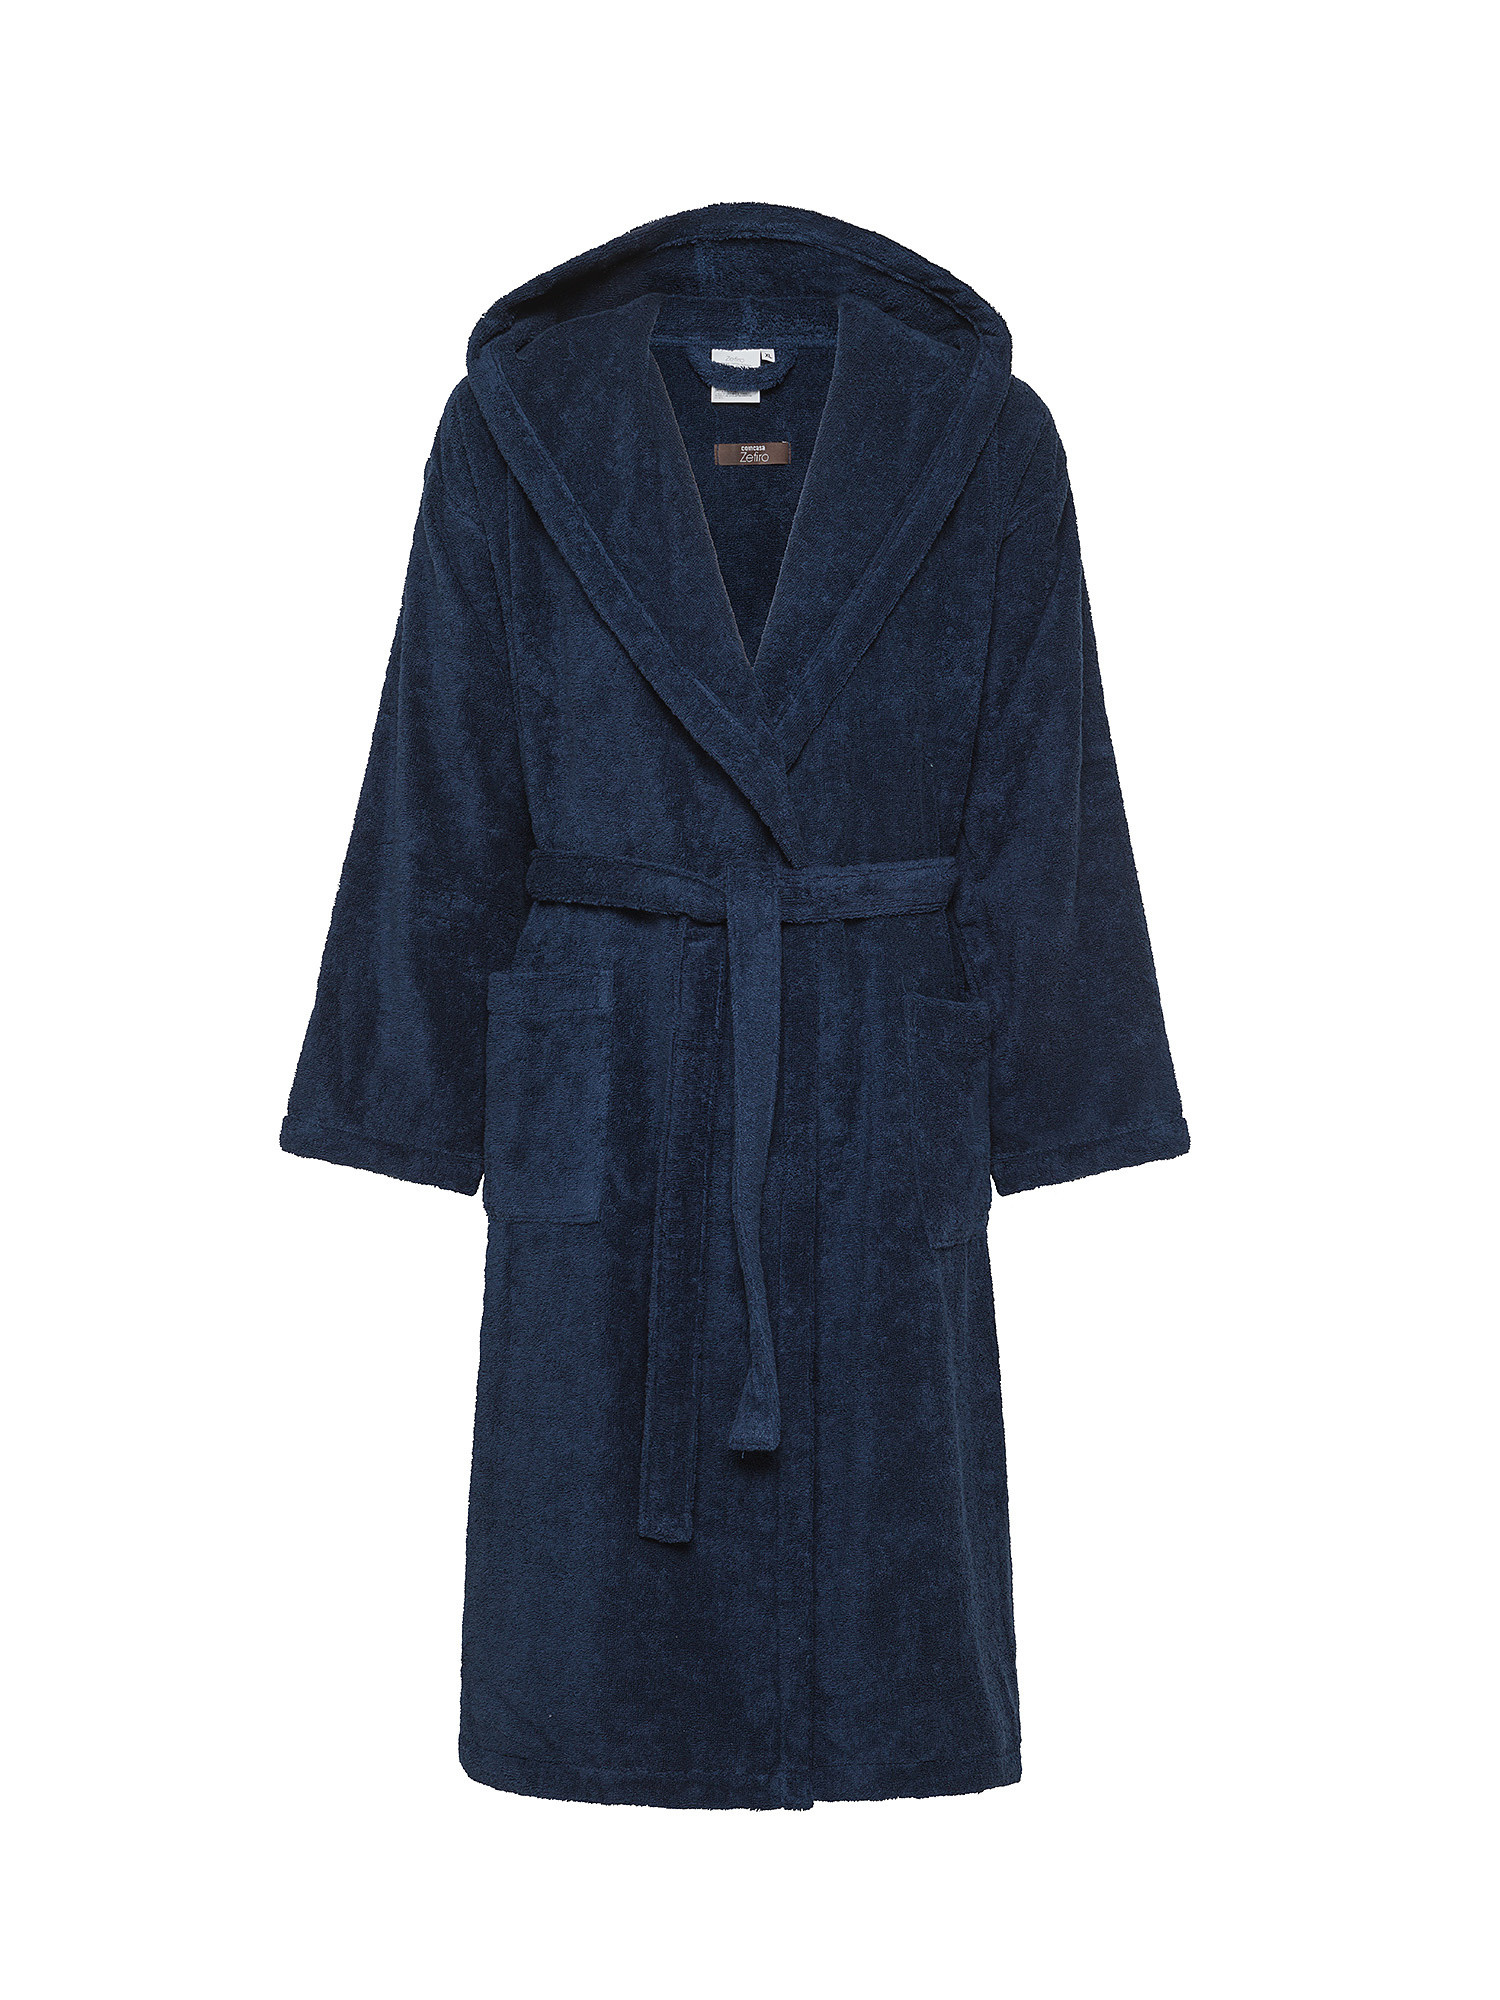 Zefiro solid color 100% cotton bathrobe, Dark Blue, large image number 0